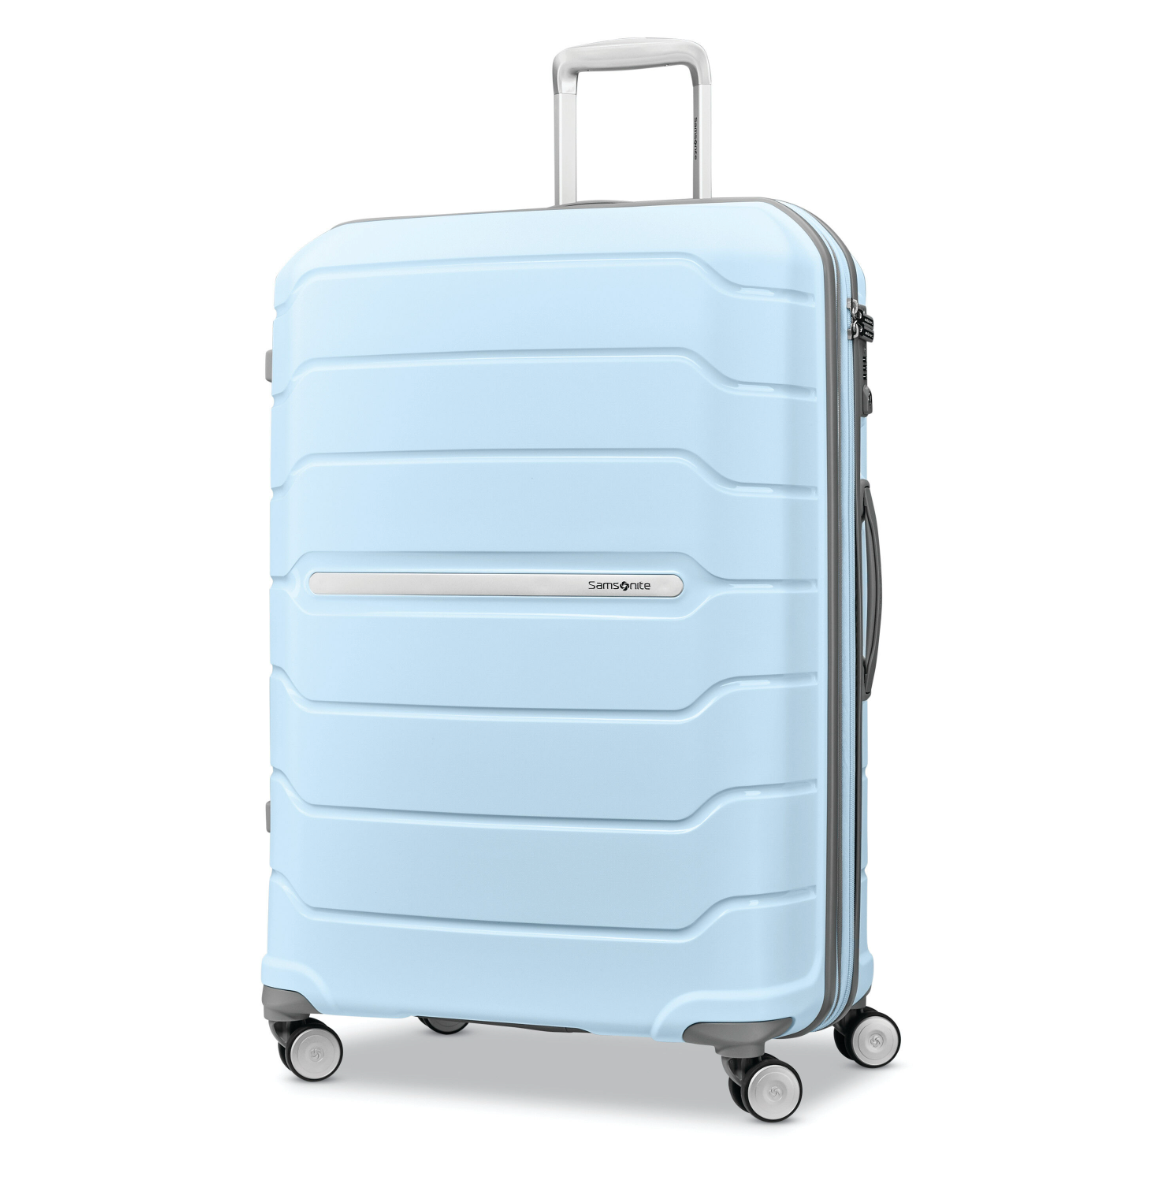 Versterker ziek Komst Samsonite Luggage Is On Sale: Save 25% on Labor Day Travel Gear |  Entertainment Tonight